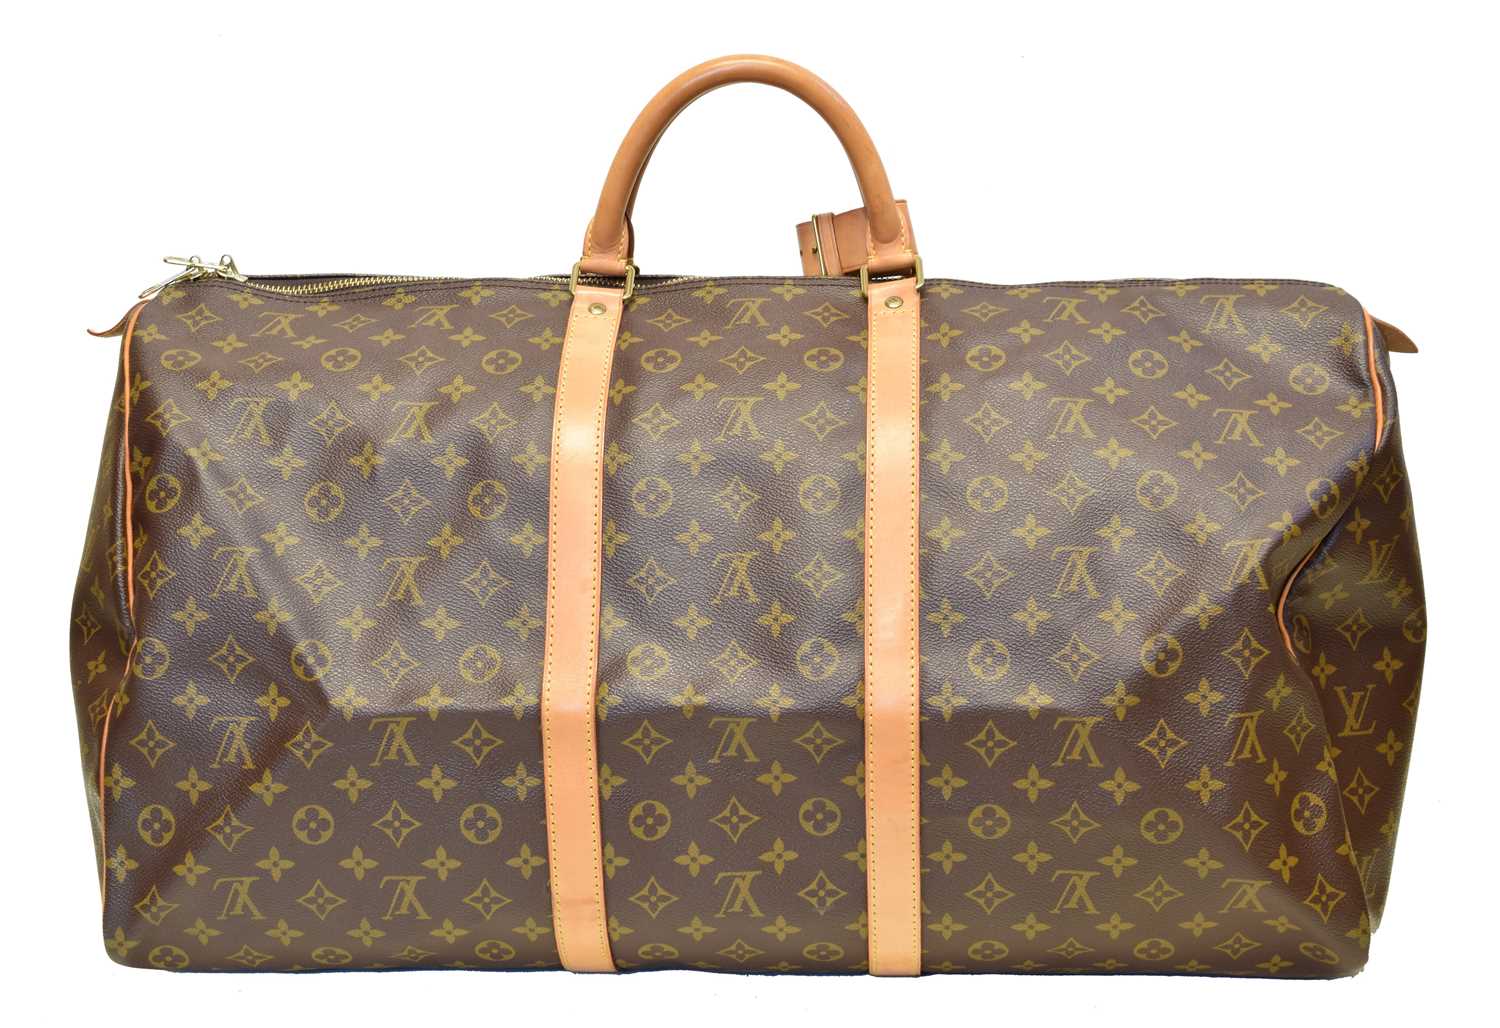 A Louis Vuitton monogram Keepall 60 luggage bag,